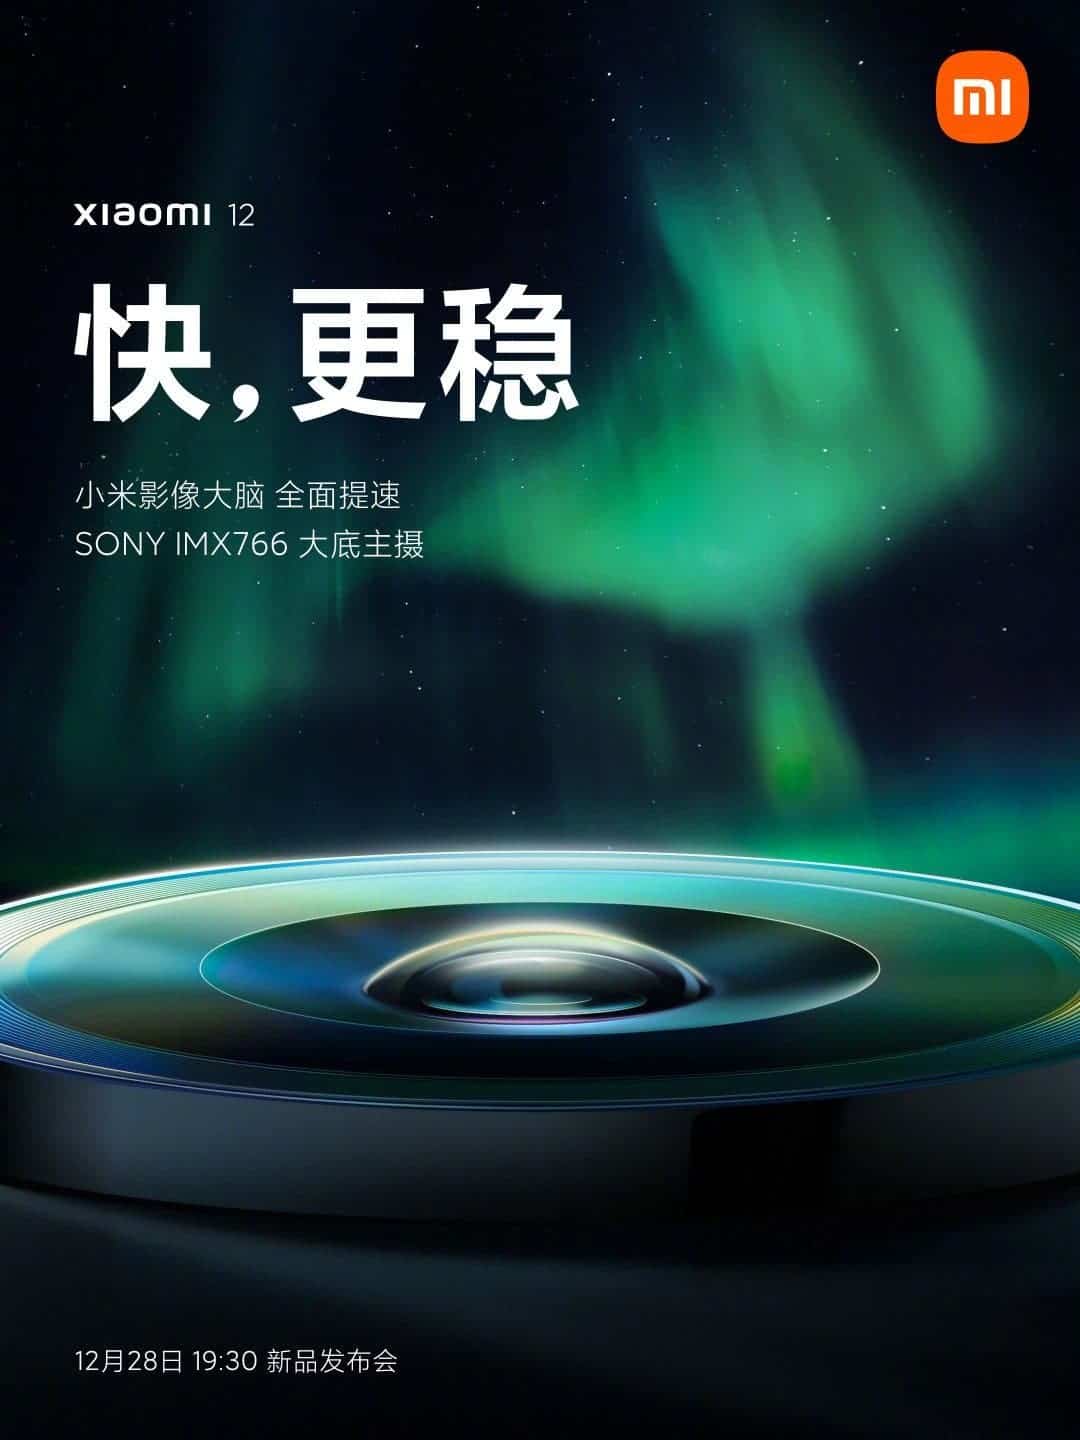 مشخصات دوربین اسمارت‌فون‌های سری شیائومی 12 رسما اعلام شد